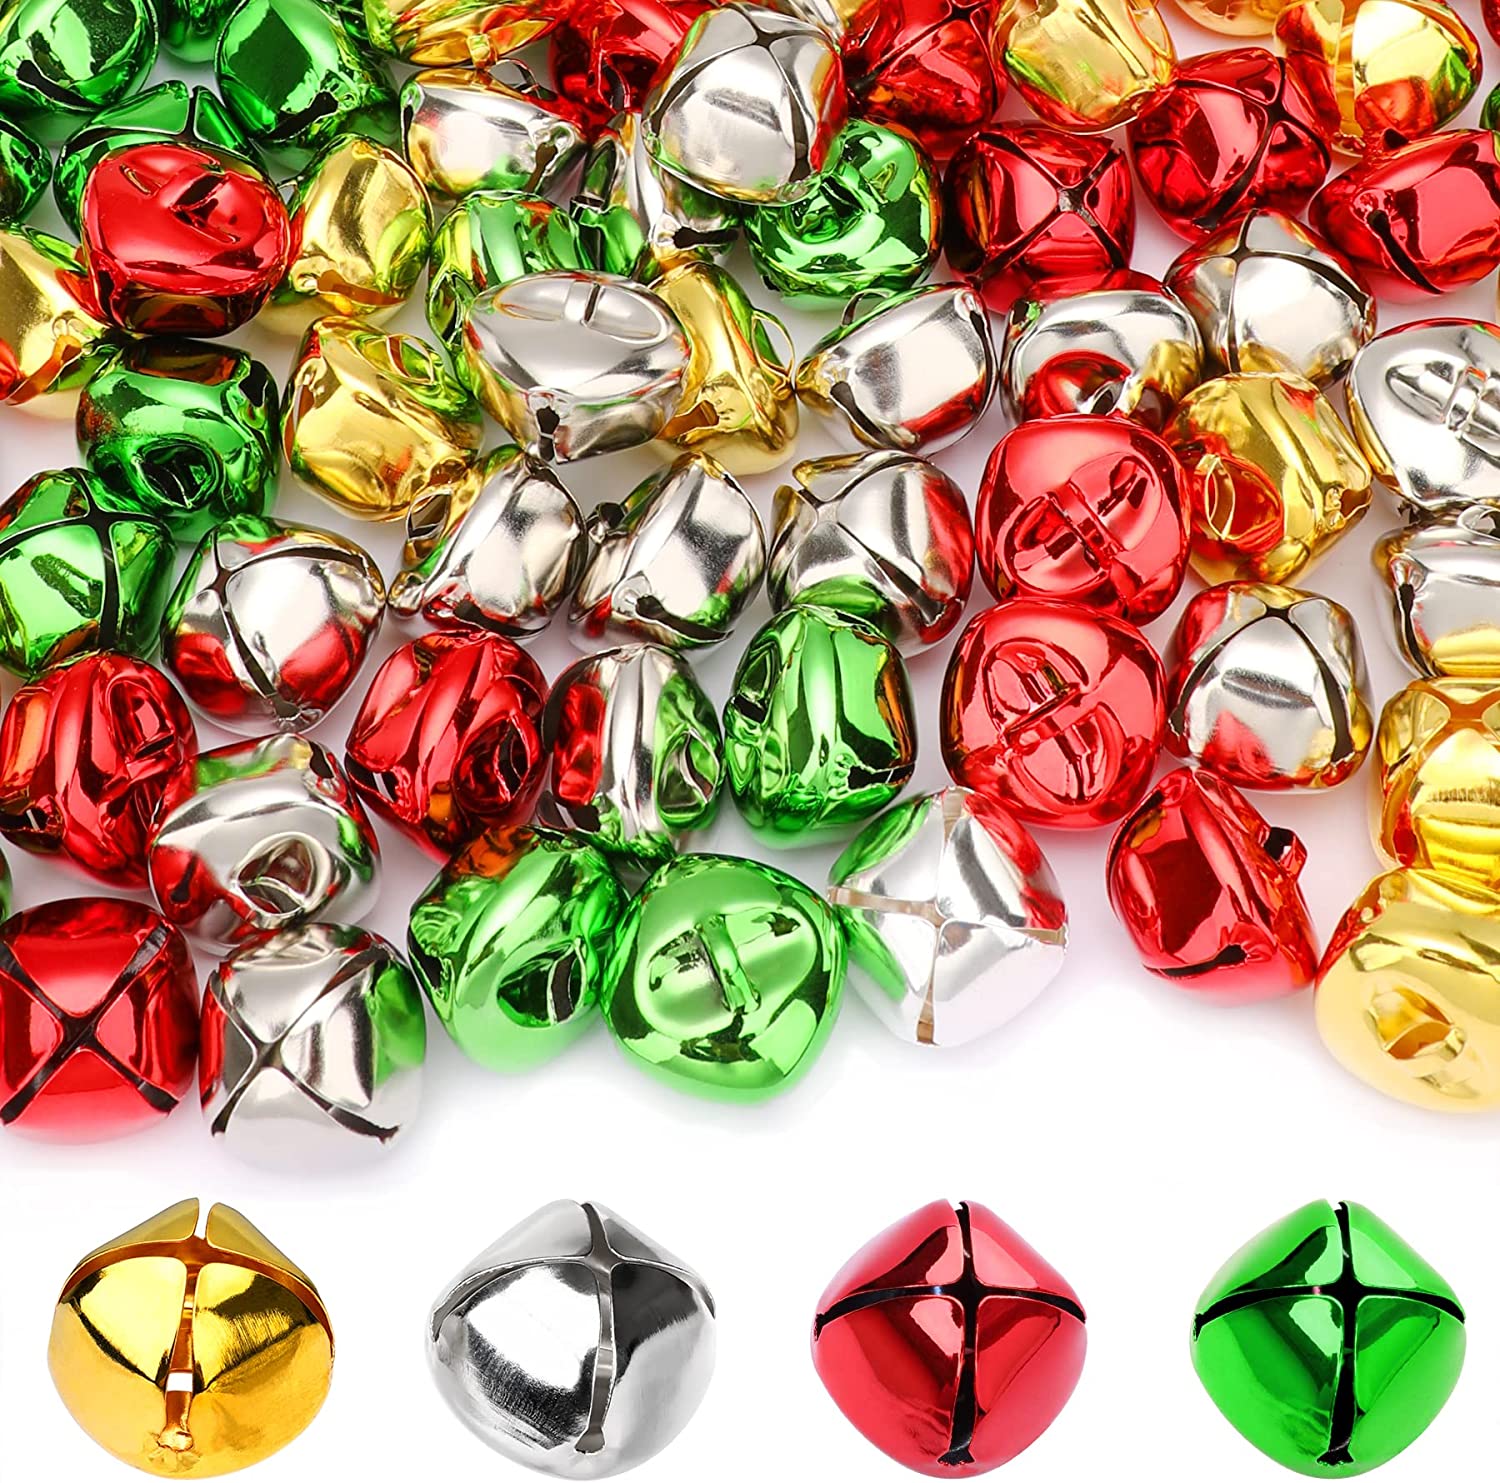 Mr. Pen- Jingle Bells, 1 Inch, Silver, 50 Pack, Jingle Bells for